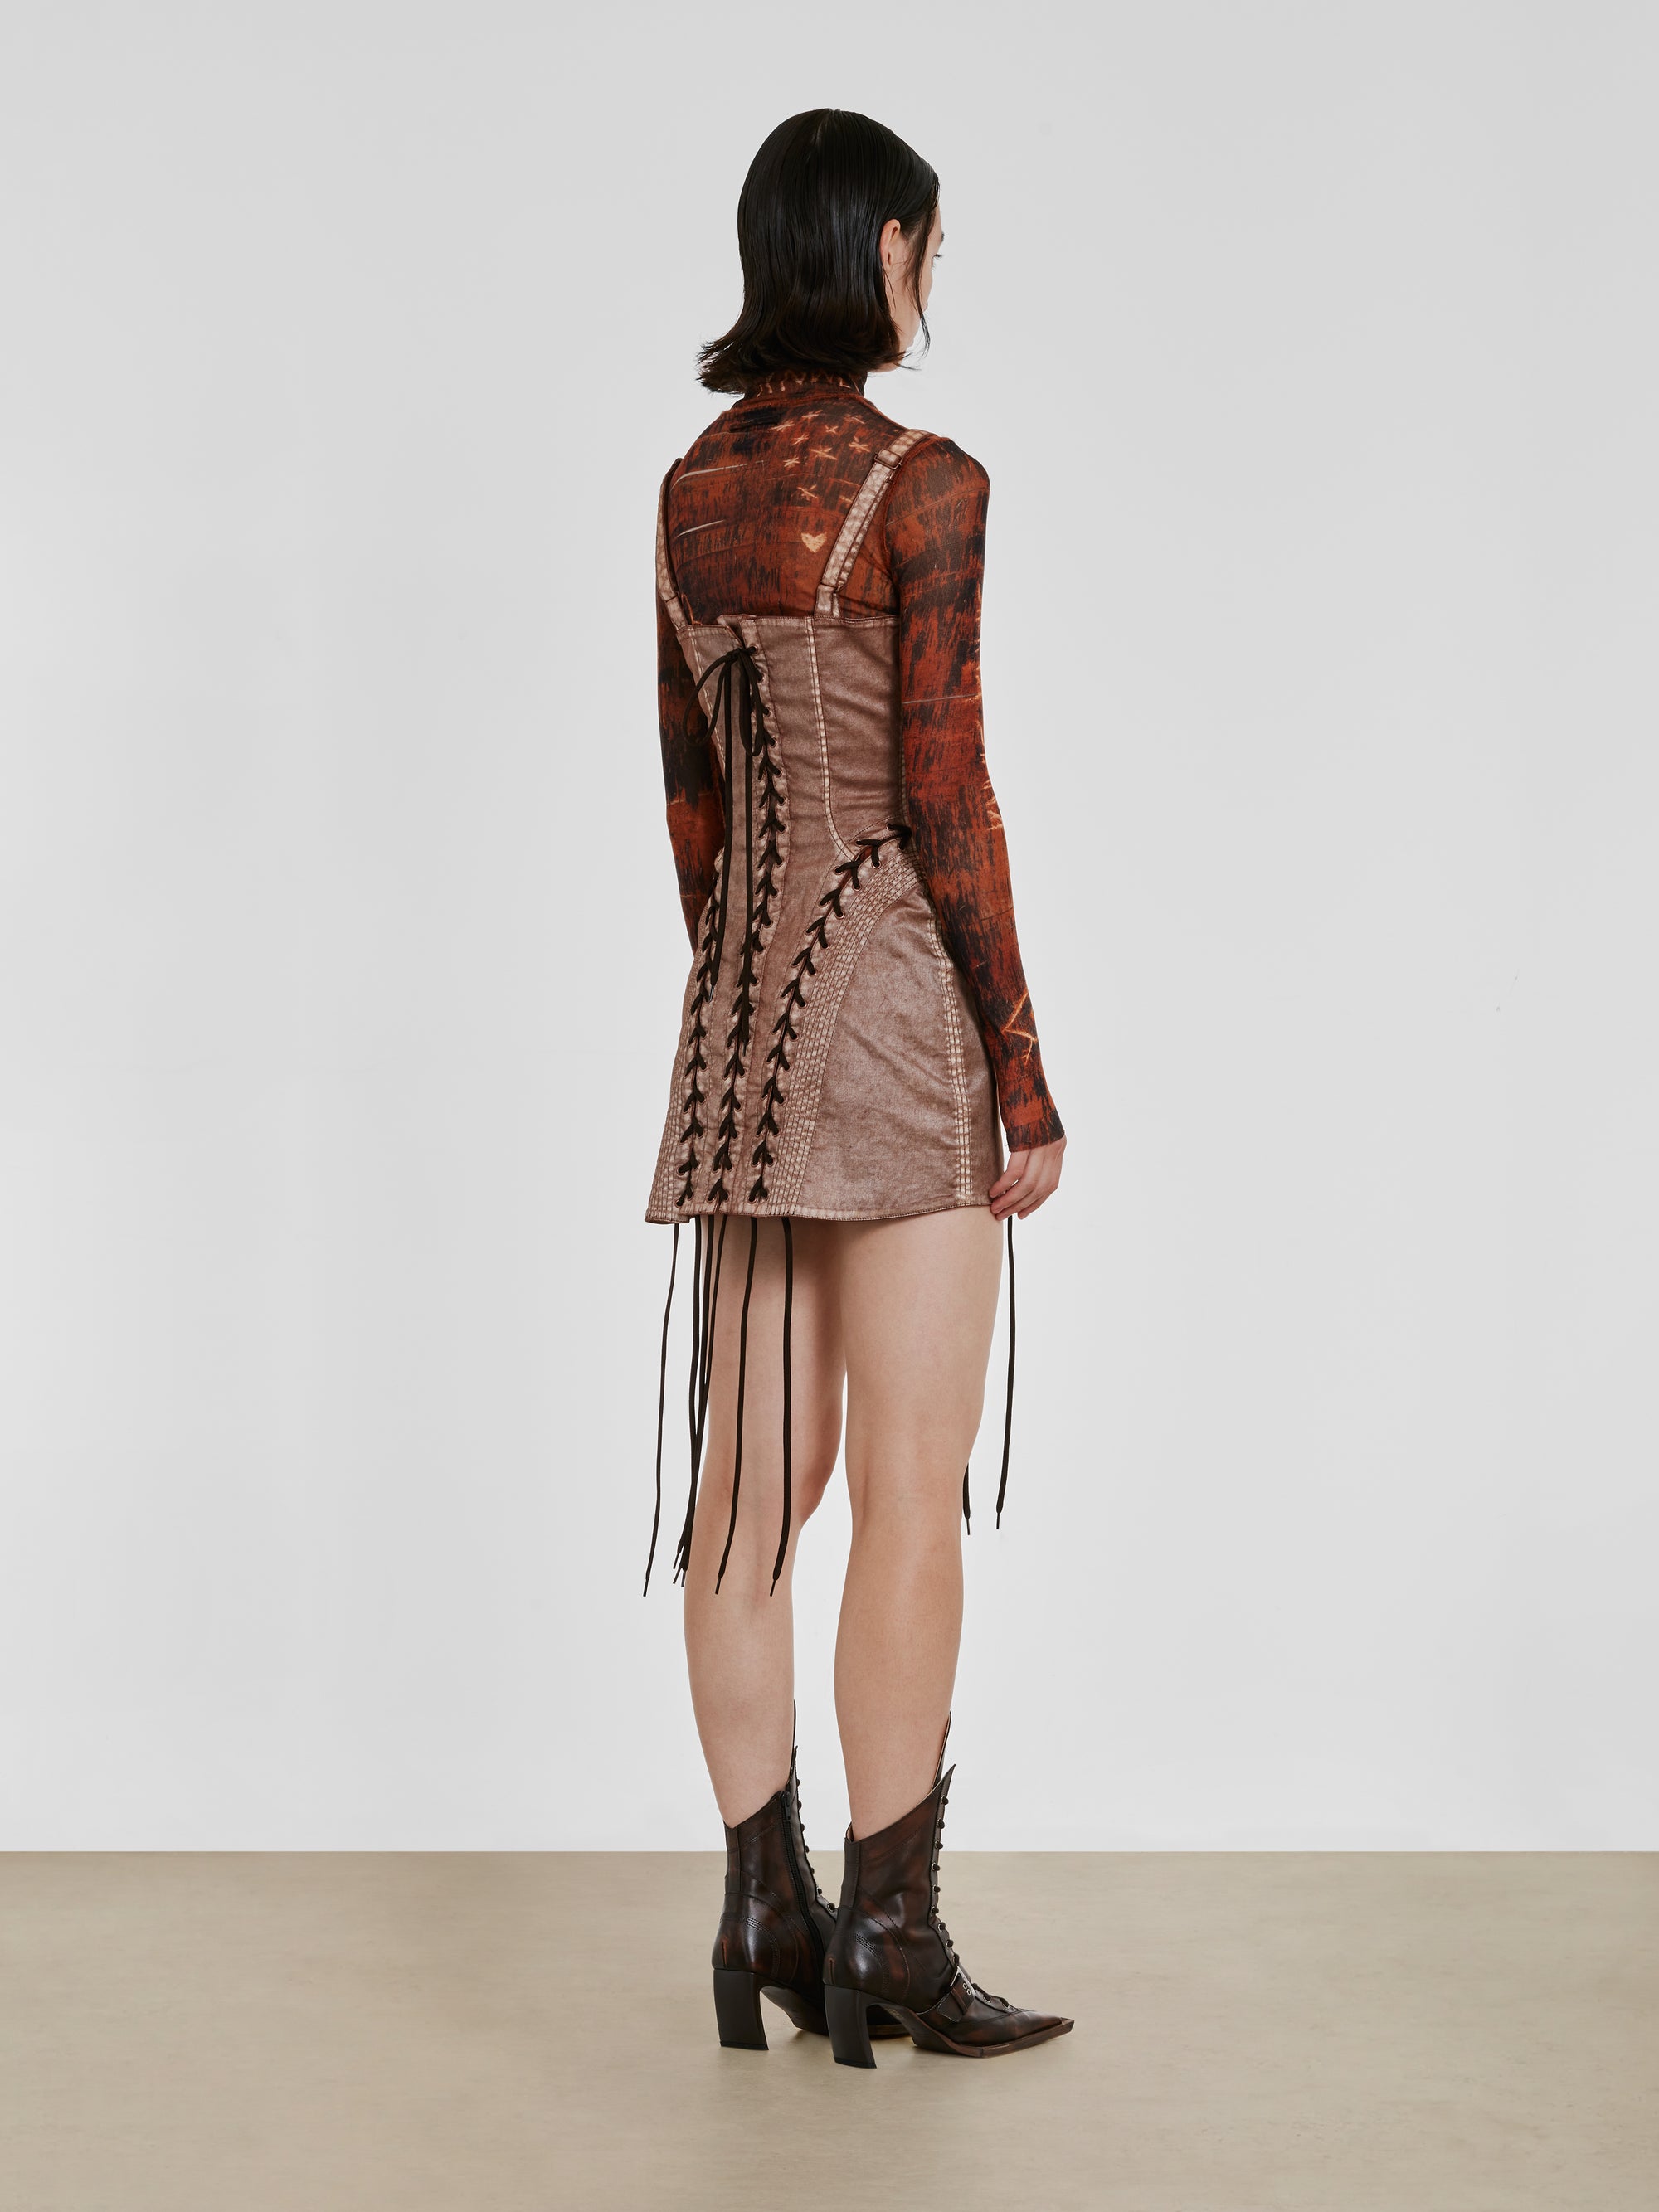 Jean Paul Gaultier - KNWLS Women’s Conical Laced Dress - (Brown/Ecru) view 3